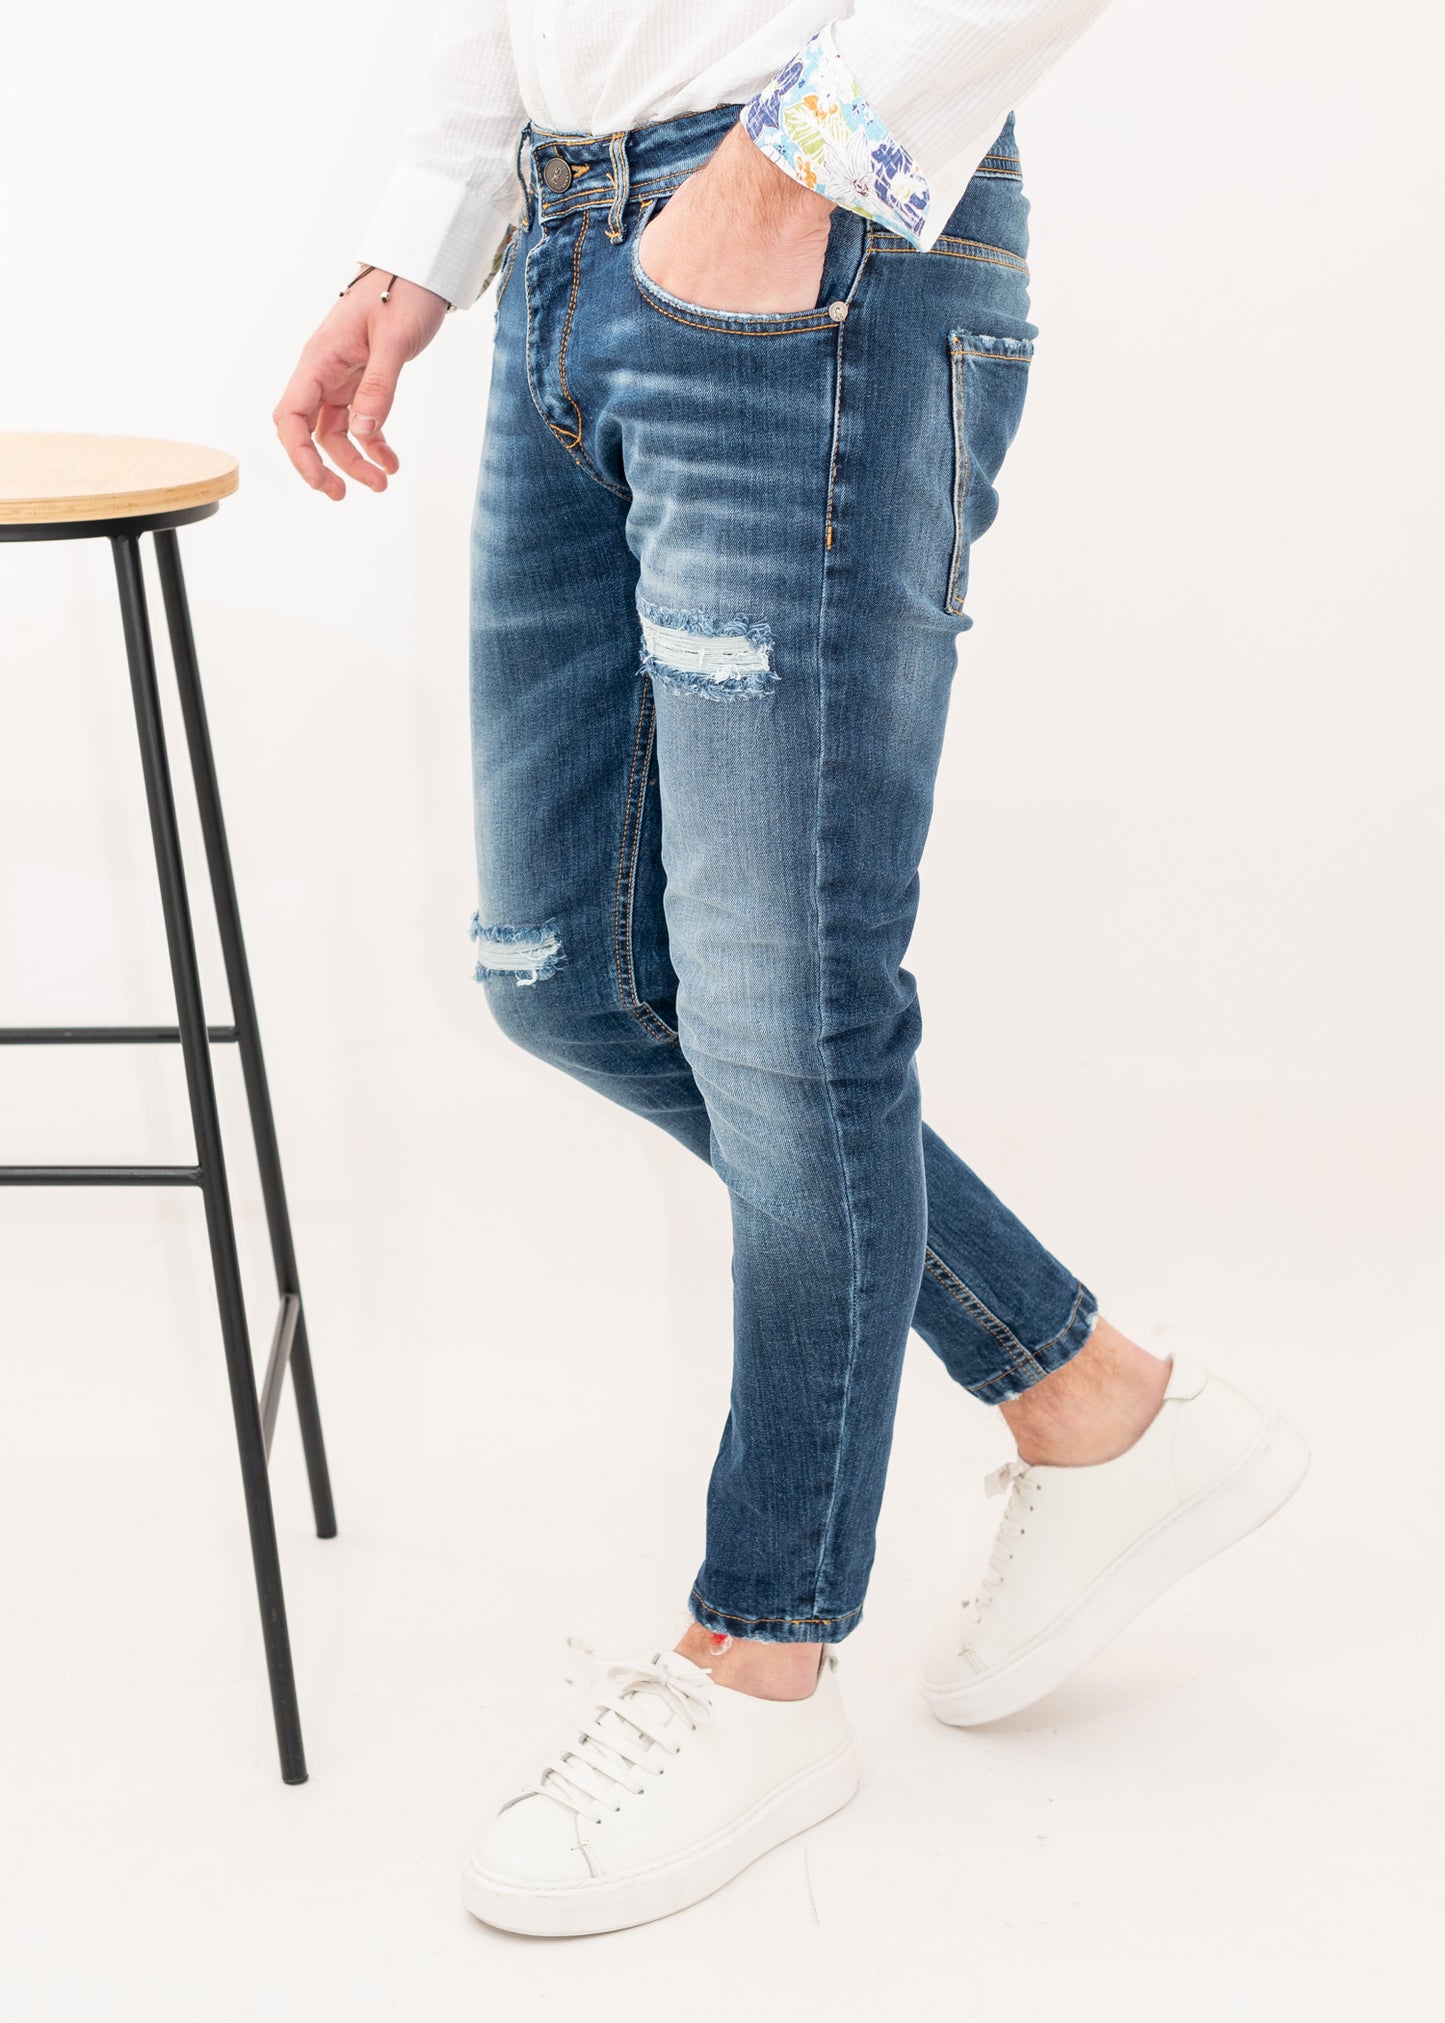 Jeans rotture LAVD32